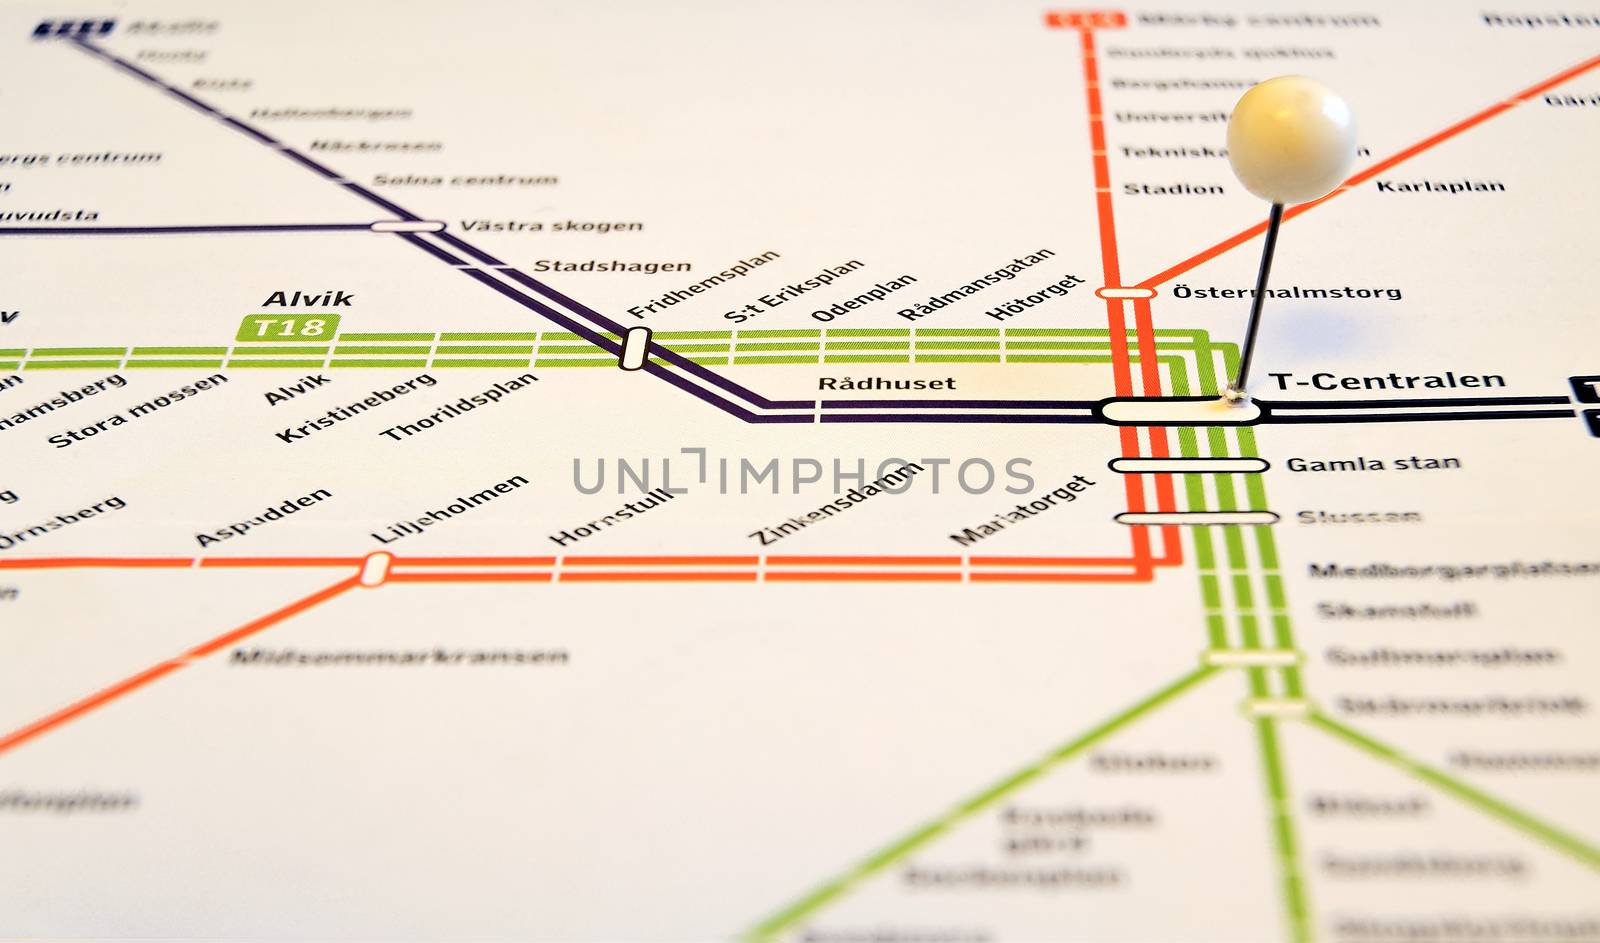 Royalty free stock photo of the Stockholm underground tube map.